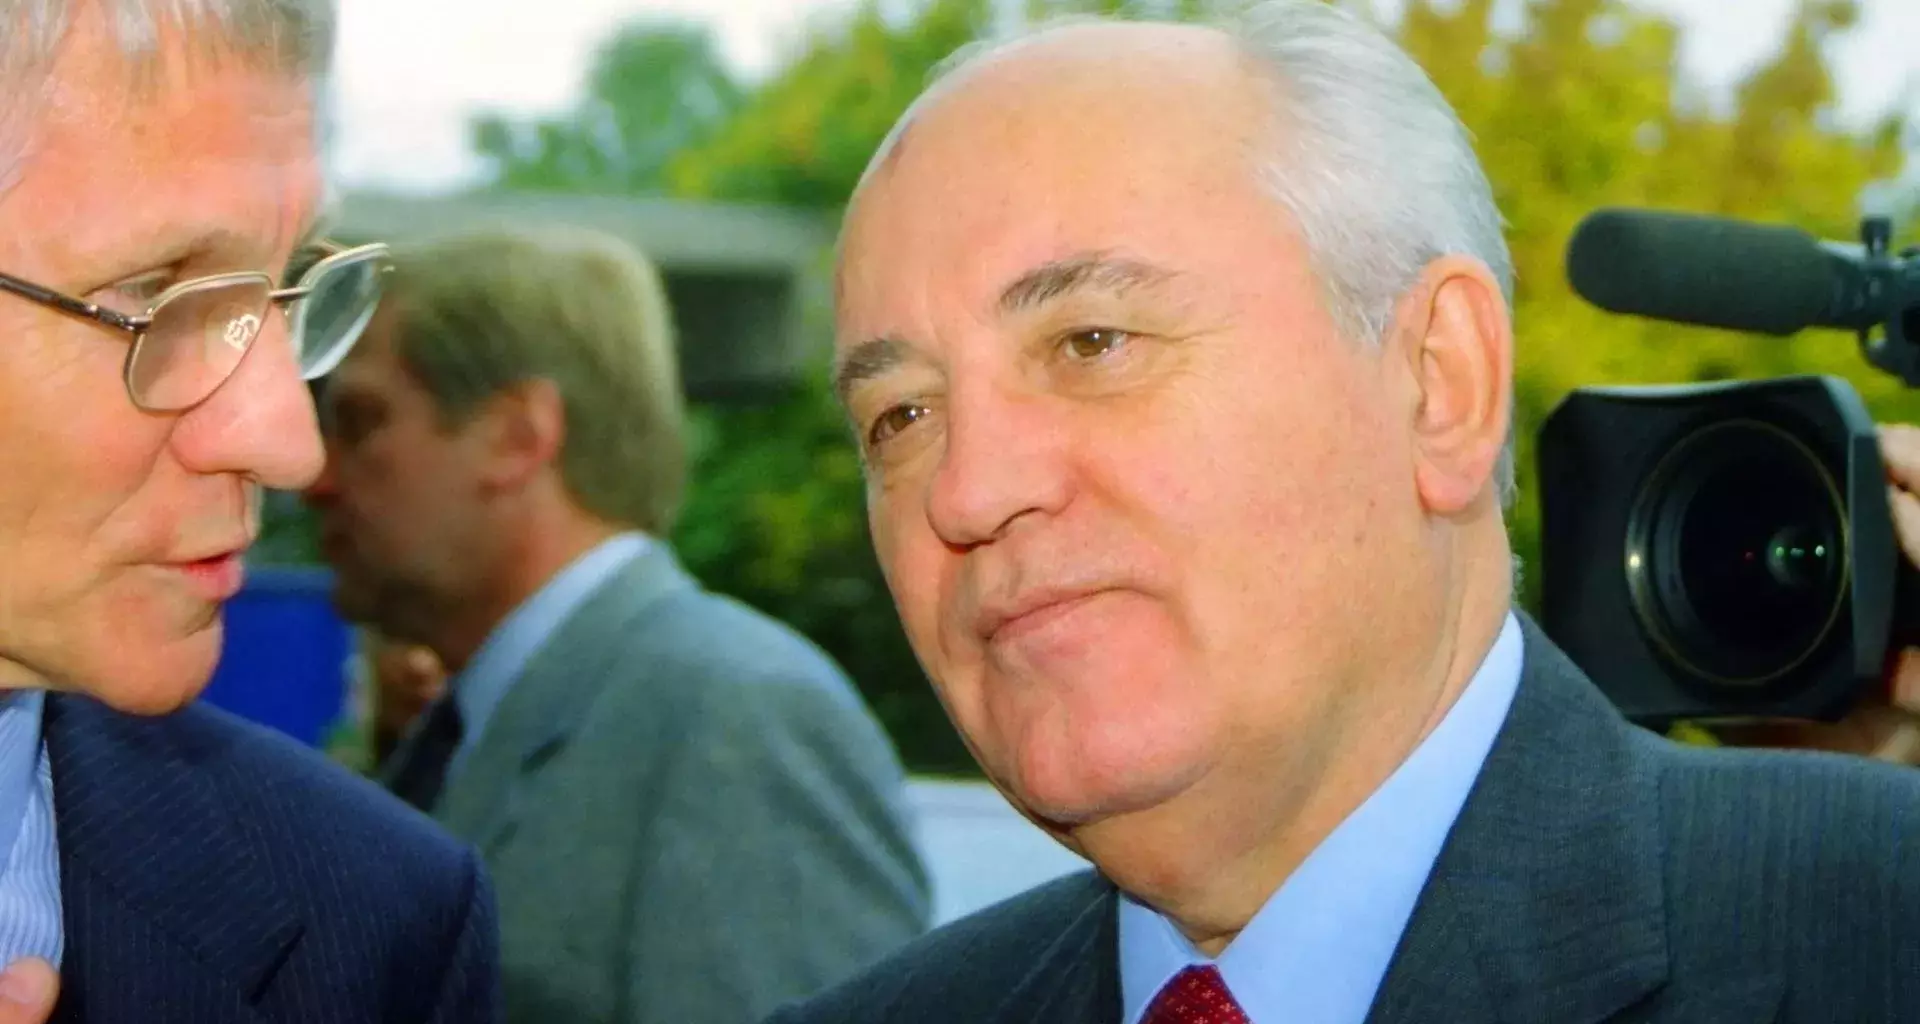 Mijaíl Gorbachov, personaje histórico y jefe de Estado de la Unión Soviética